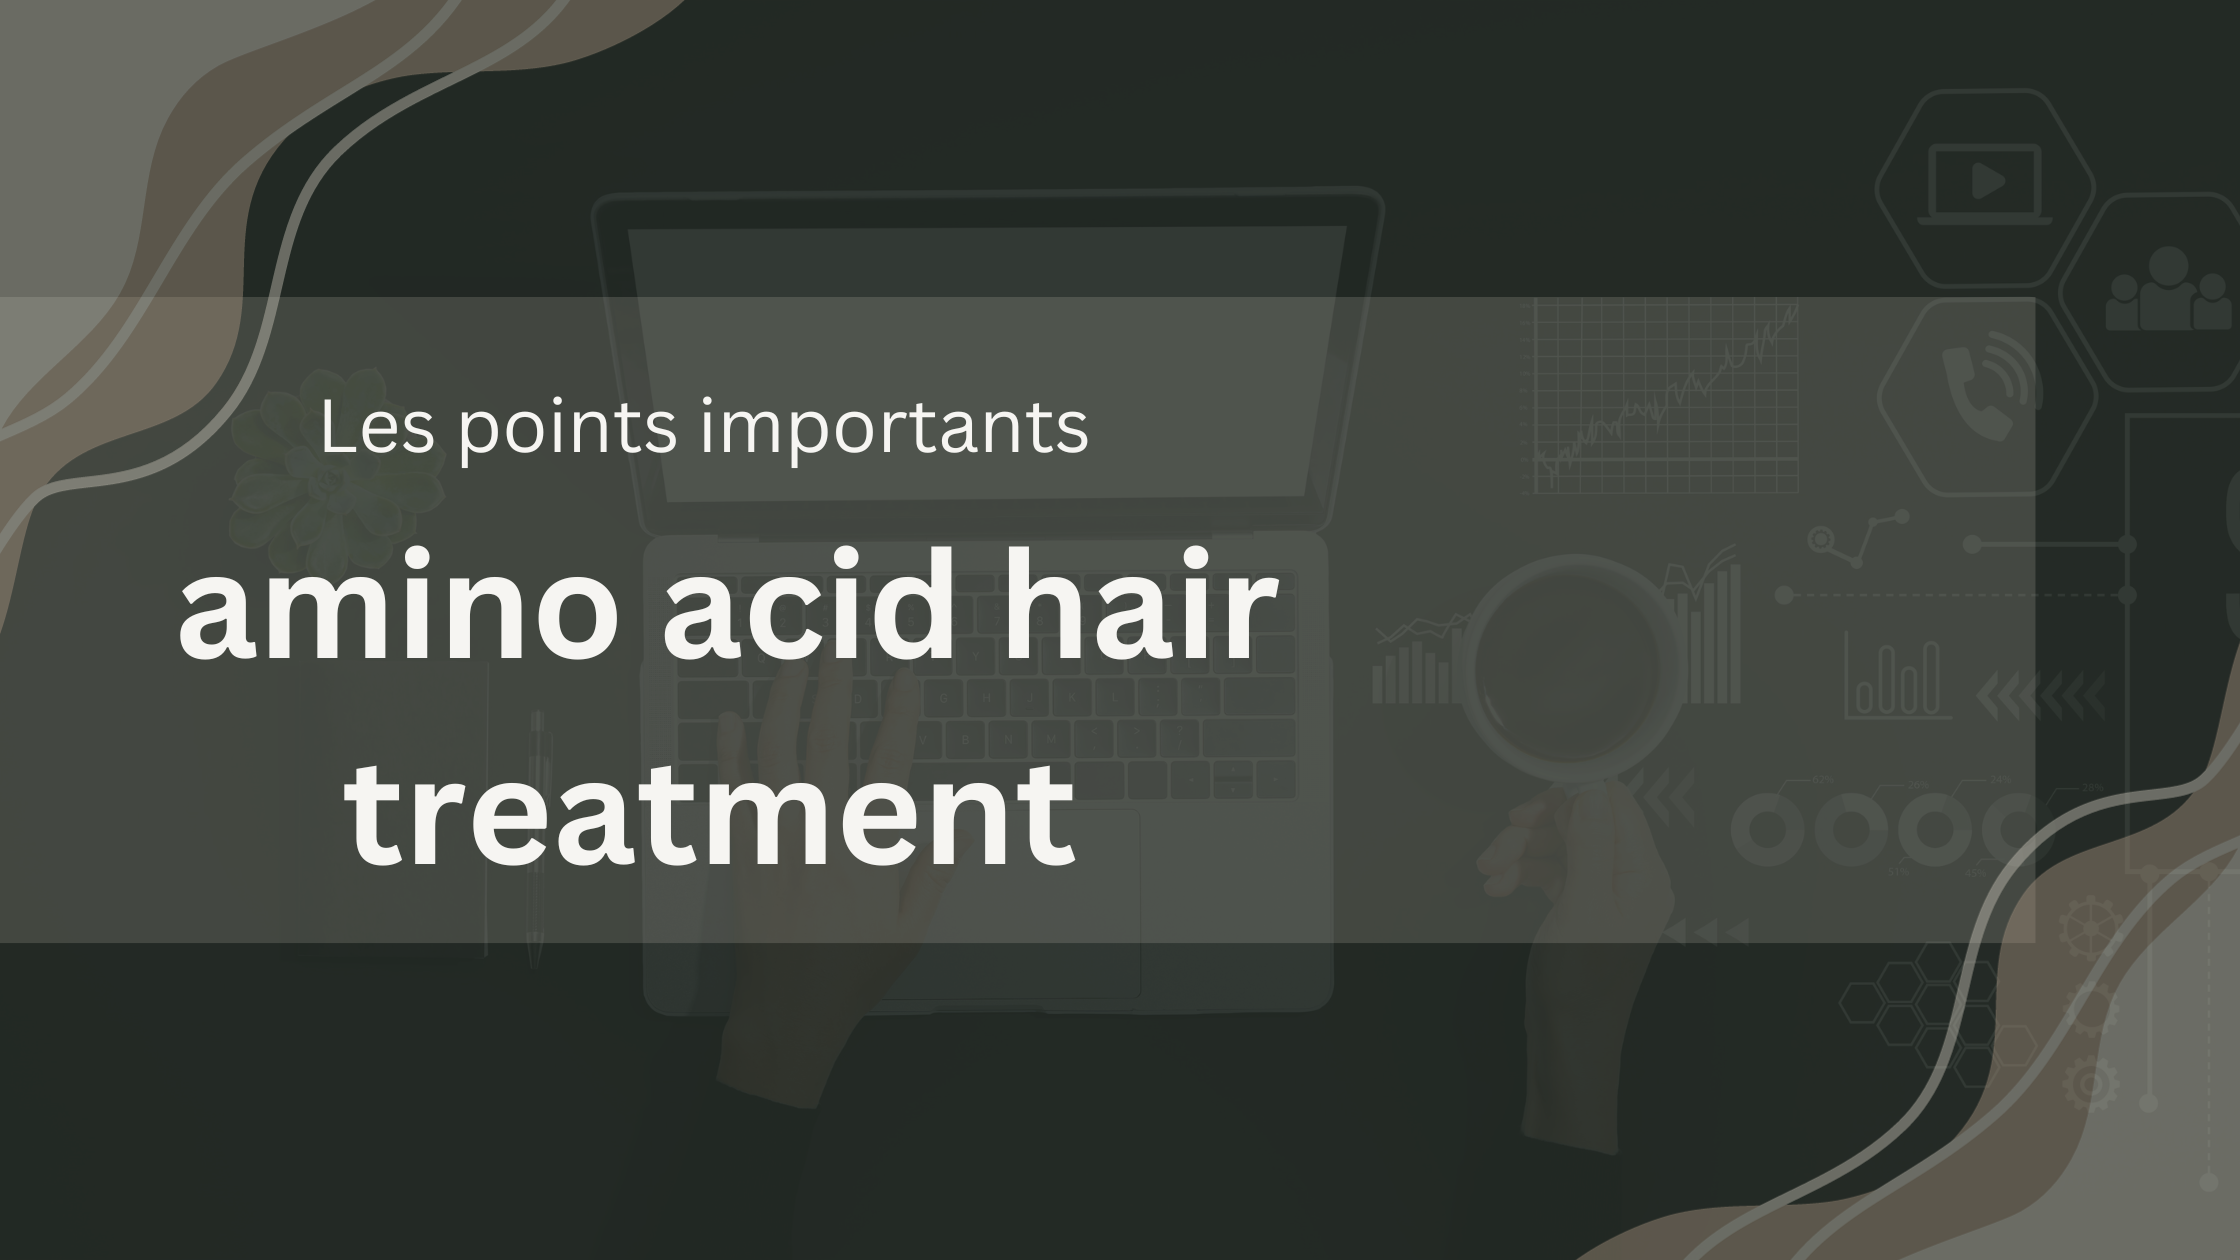 amino acid hair treatment | Les points importants